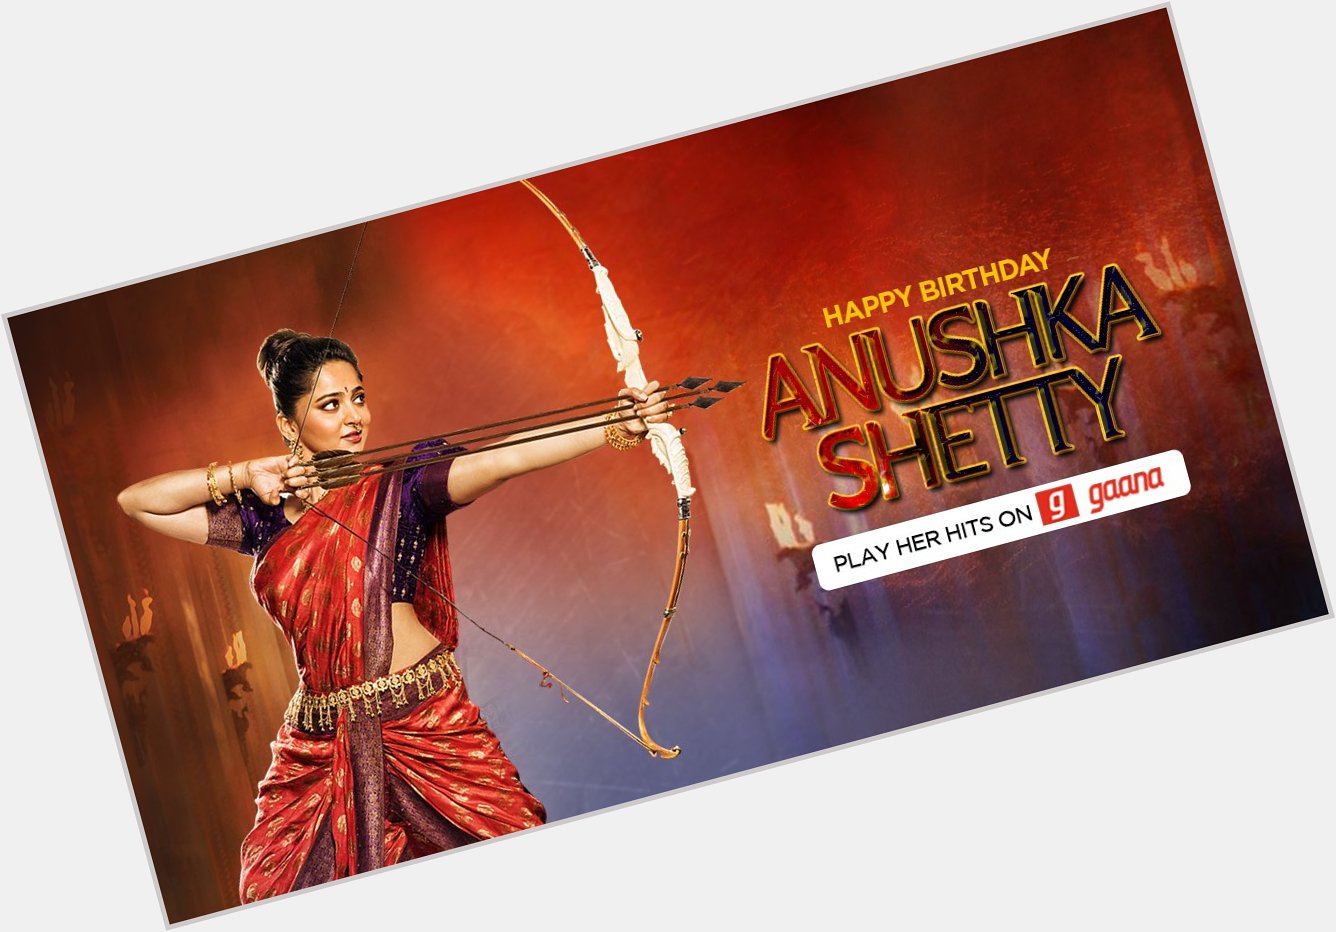 Wishing this warrior princess, Anushka Shetty a very Happy Birthday! 
Play her hits here:  